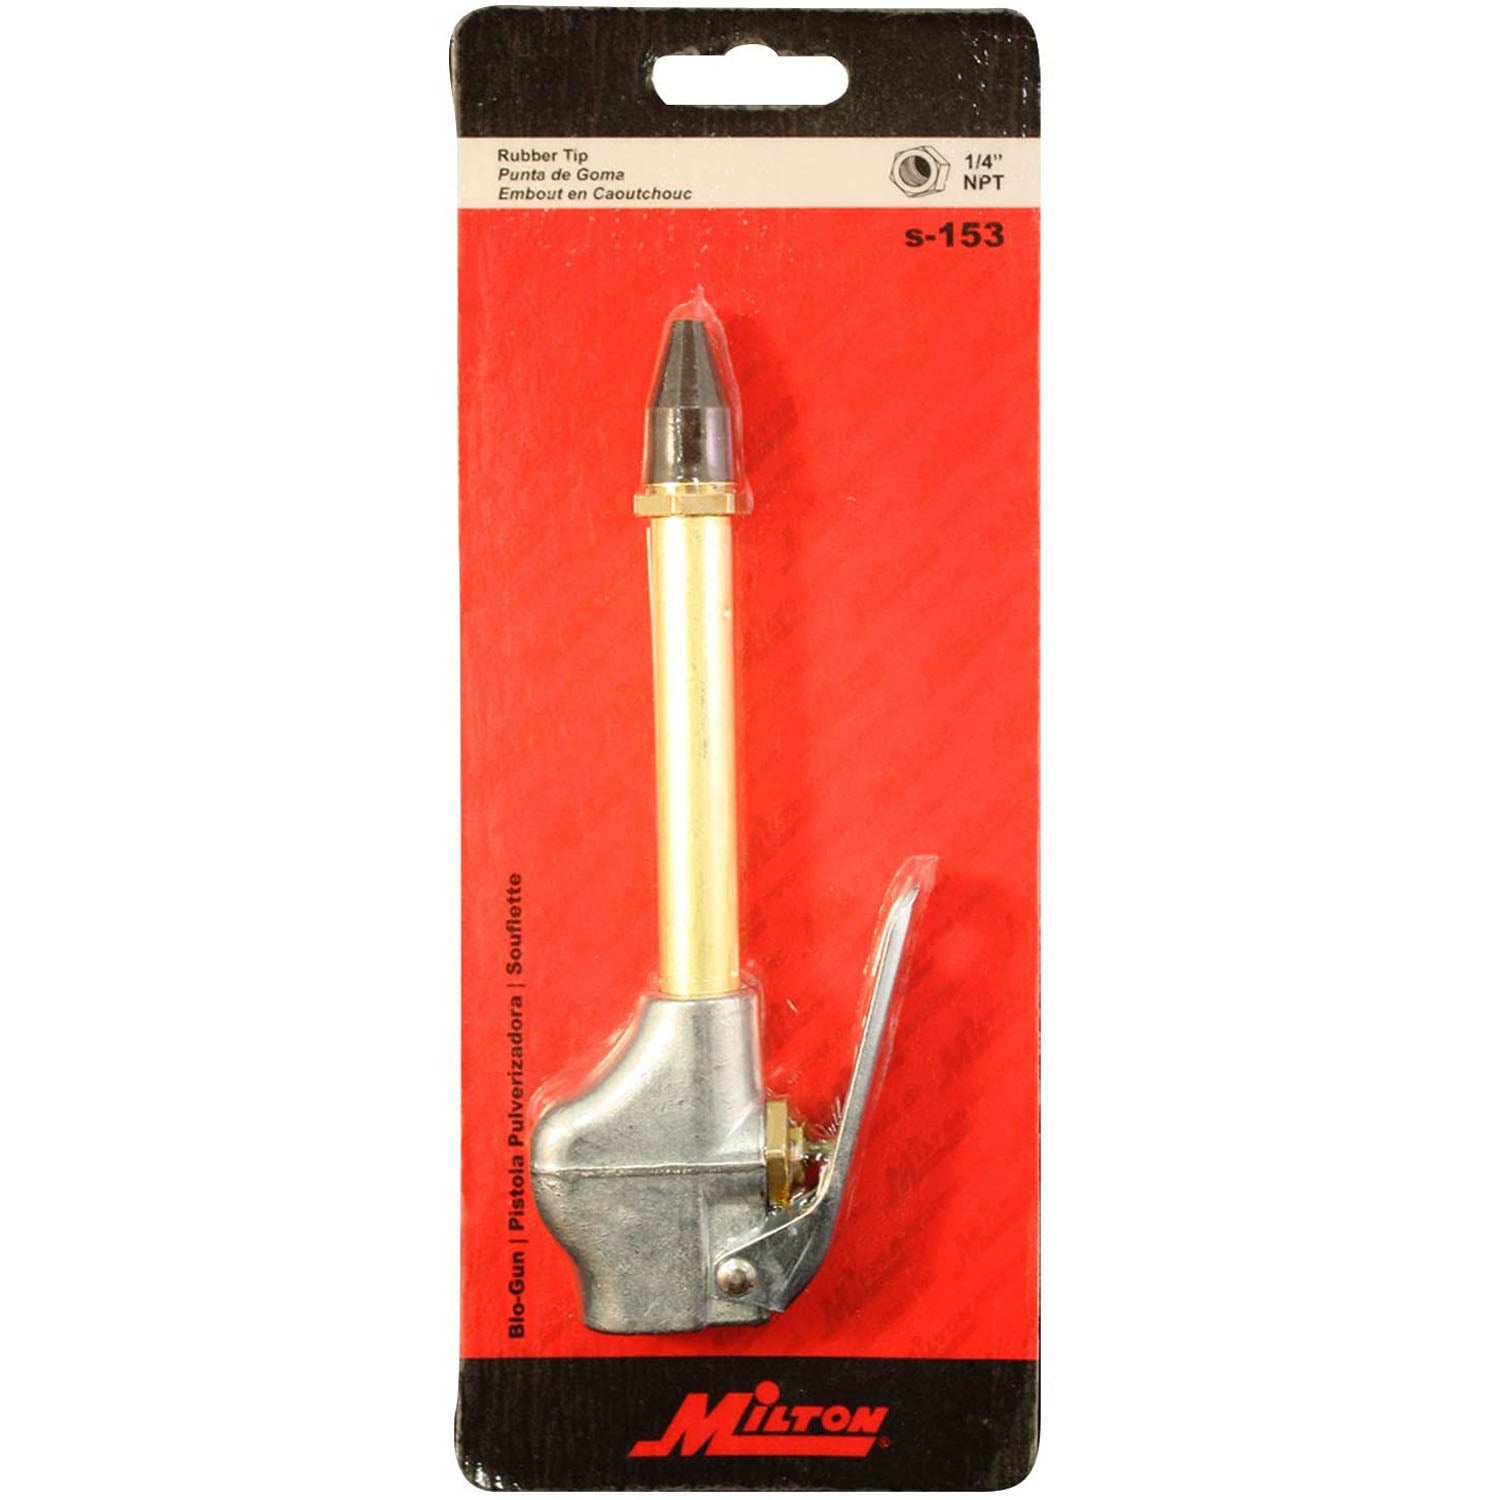 Milton 153 1/4" NPT Rubber Tip Blo-Gun